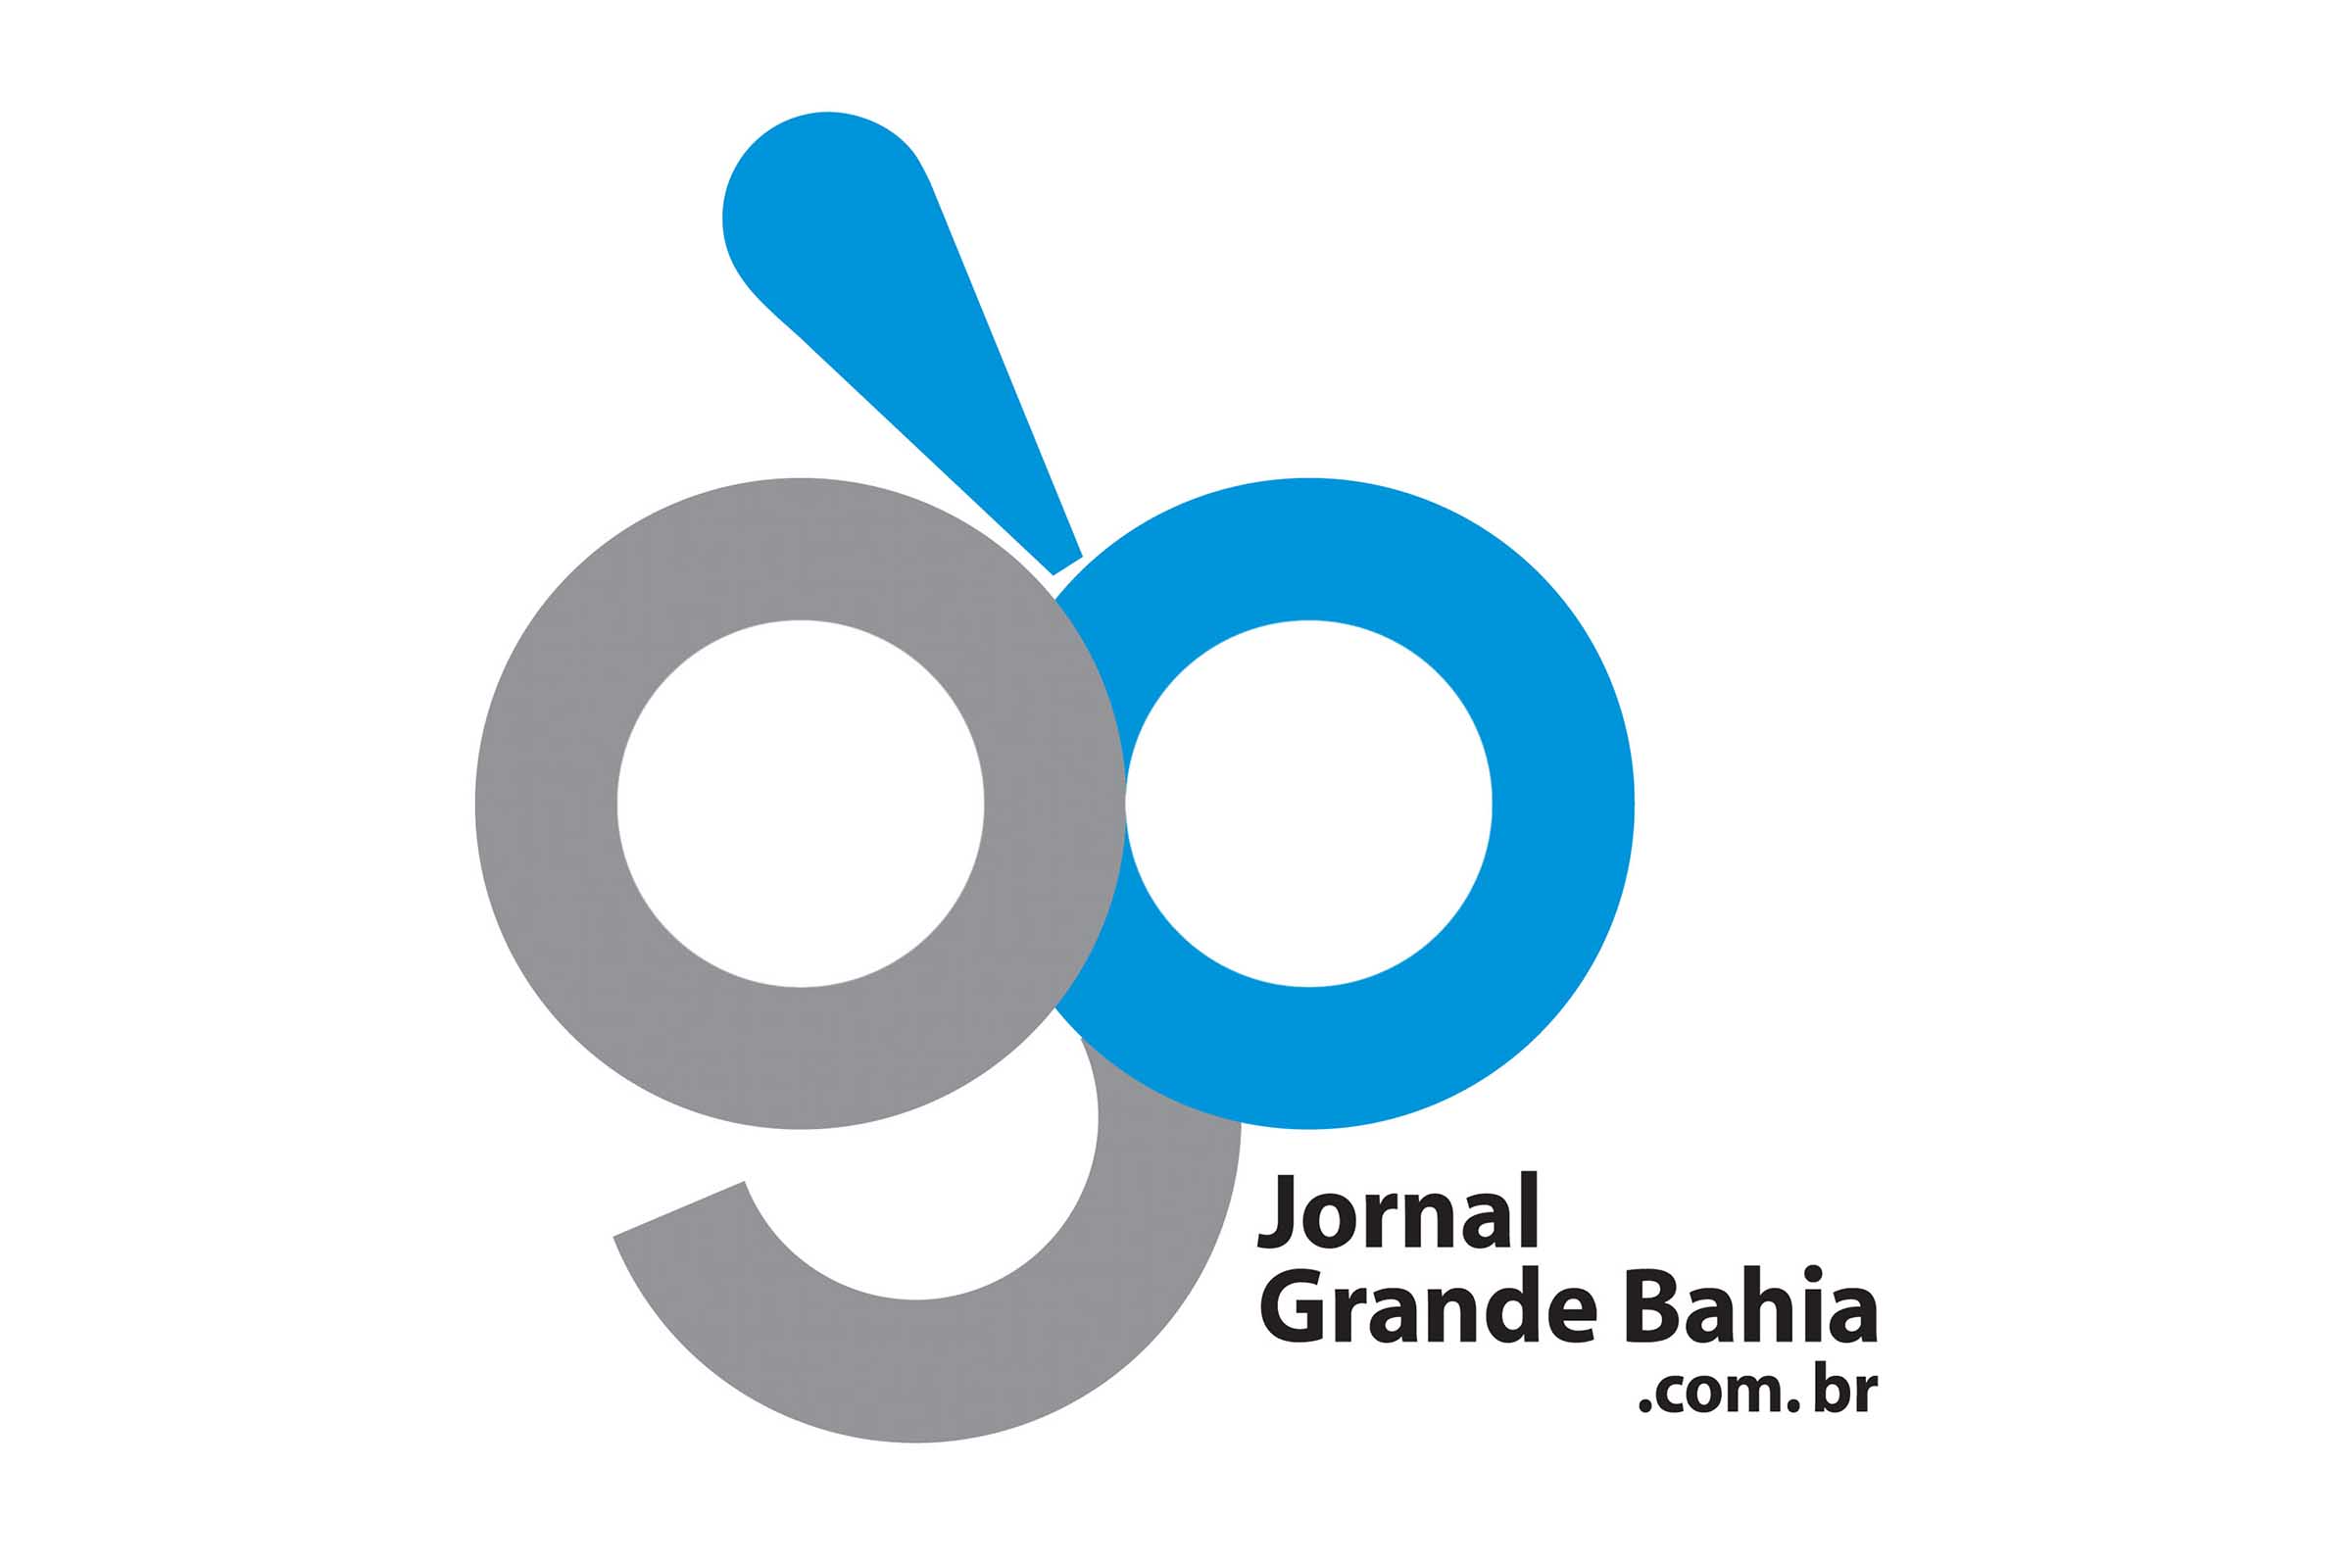 Jornal Grande Bahia compromisso em informar.Jornal Grande Bahia compromisso em informar.